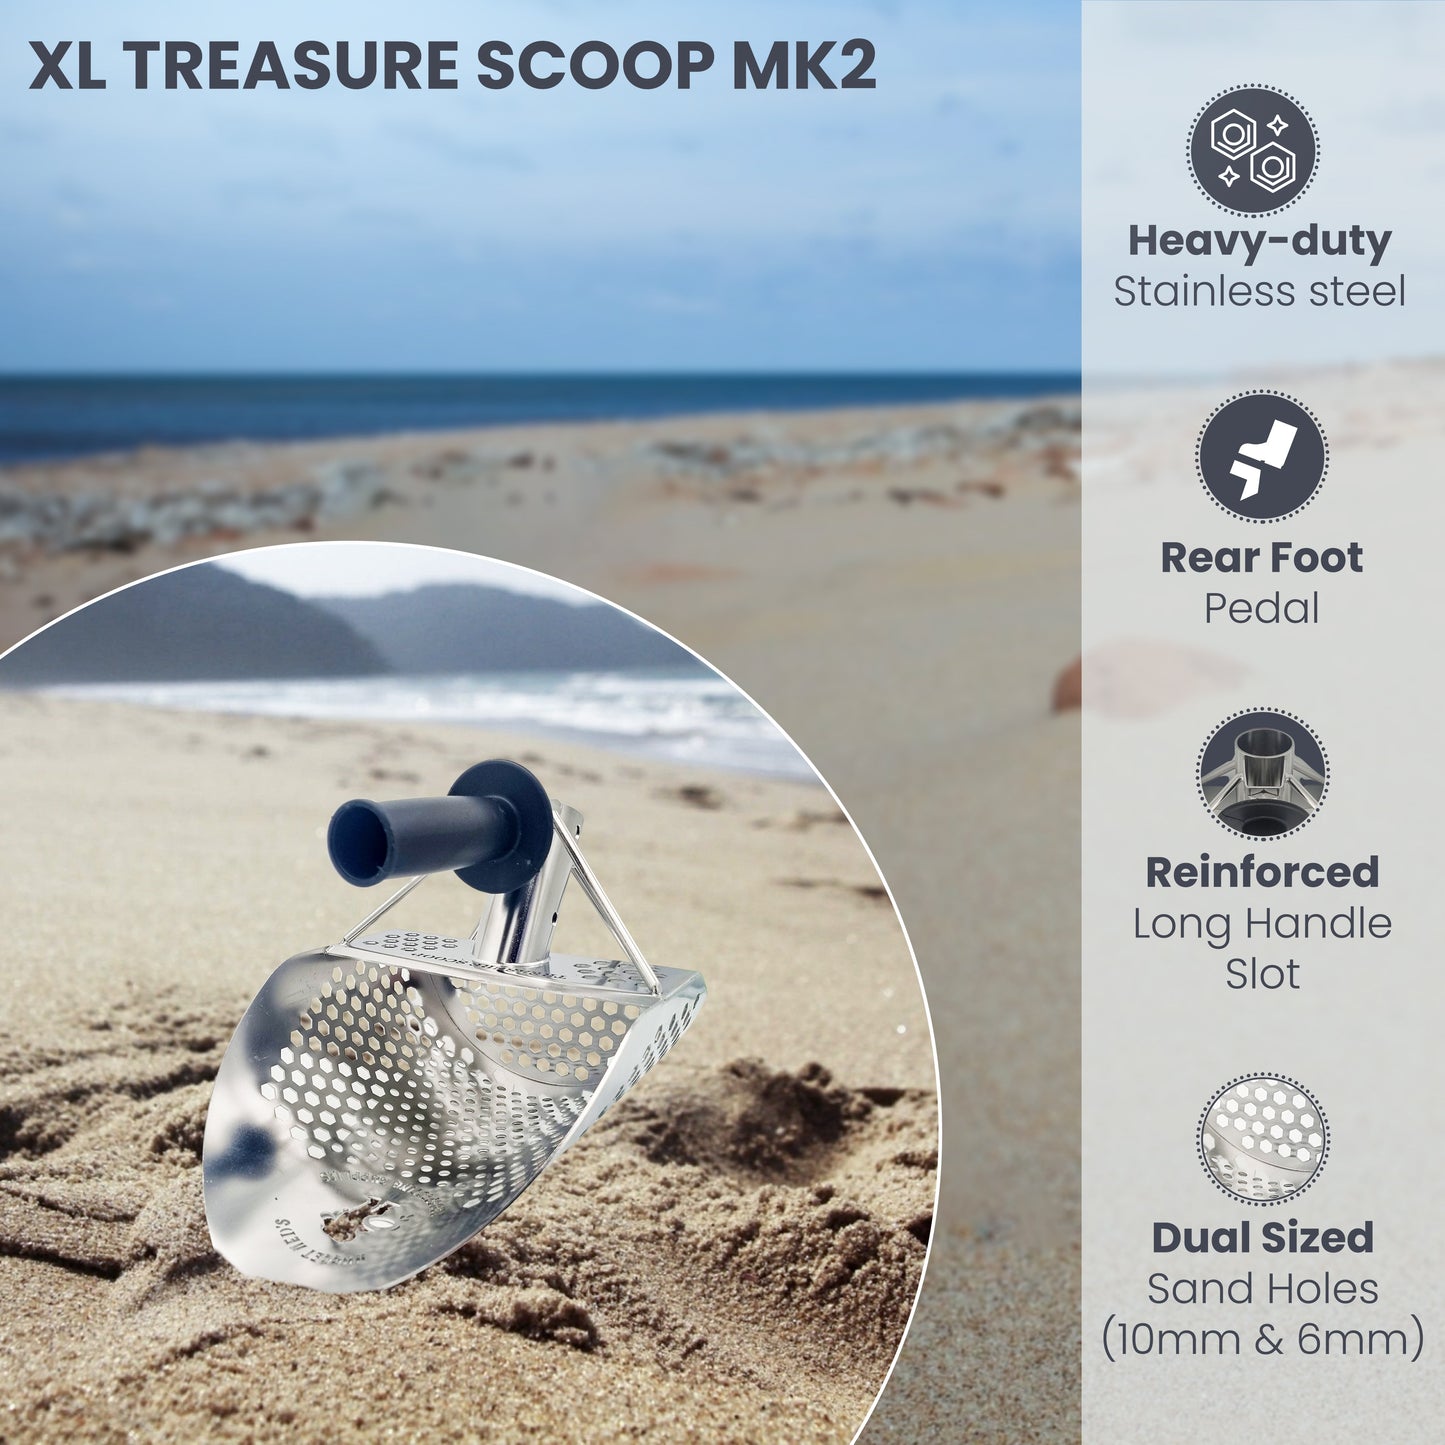 XL Treasure Scoop MK2 with Long Handle